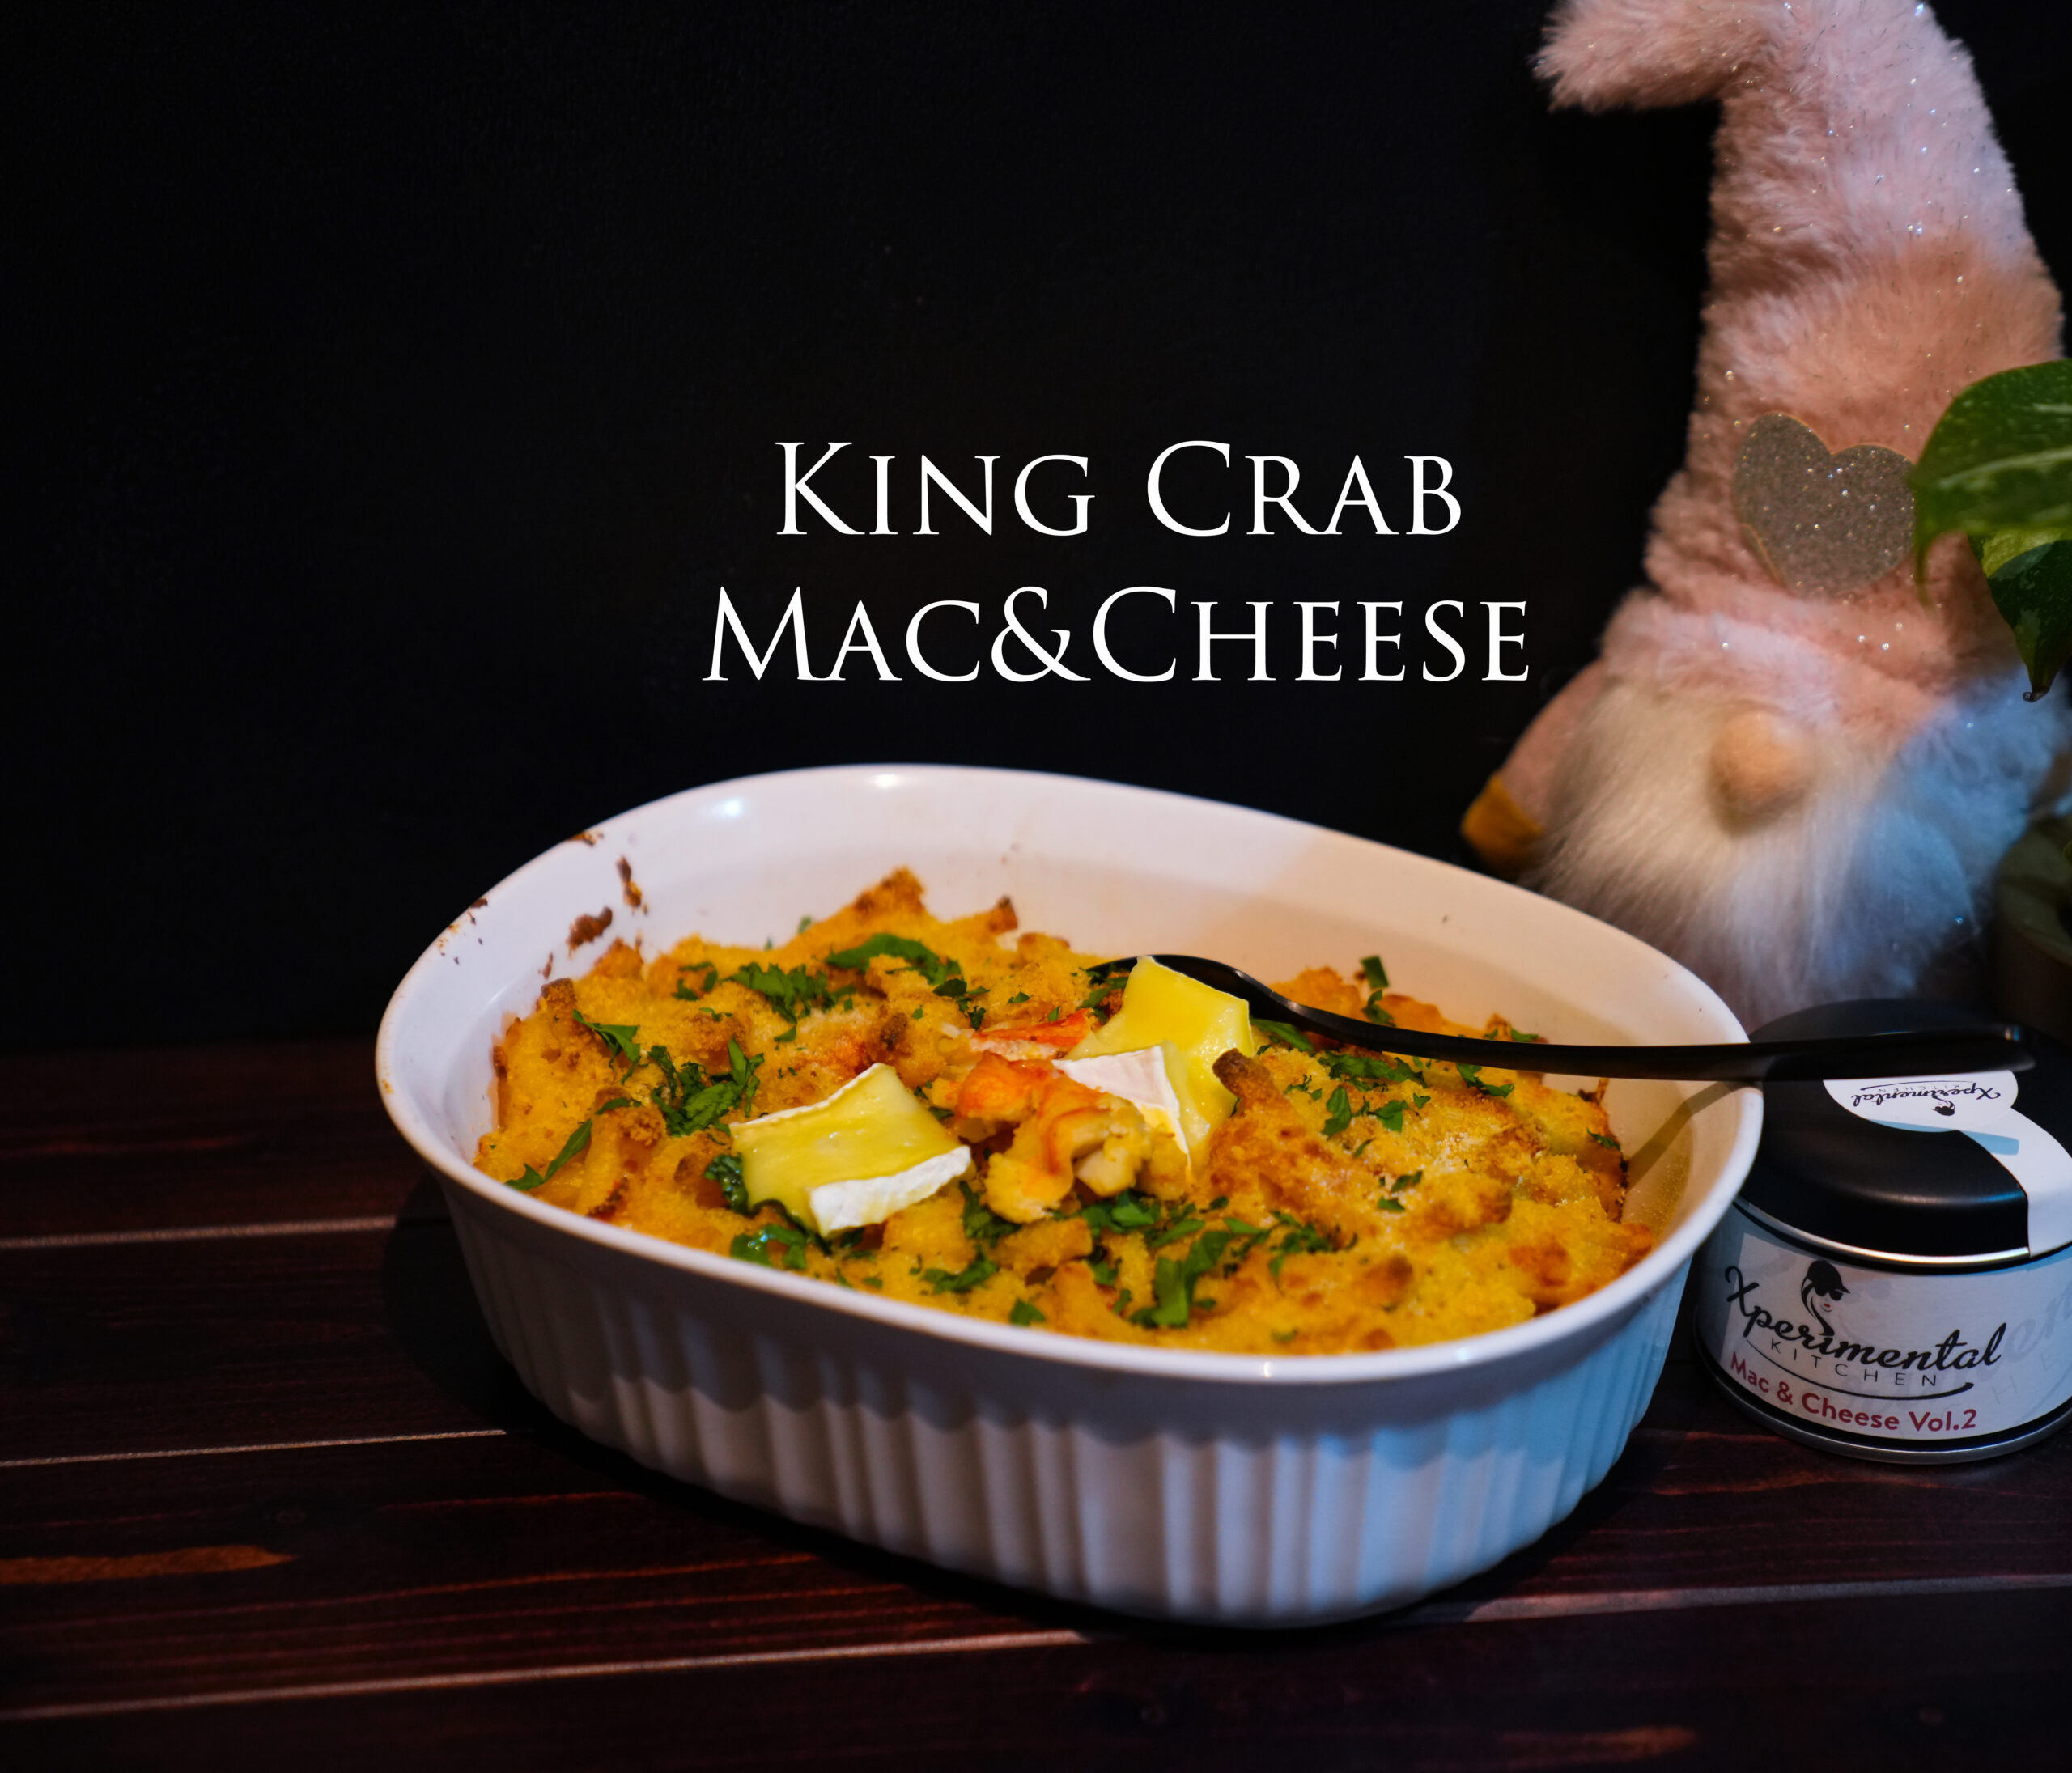 Xperimentalkitchen‘s King Crab Mac&Cheese